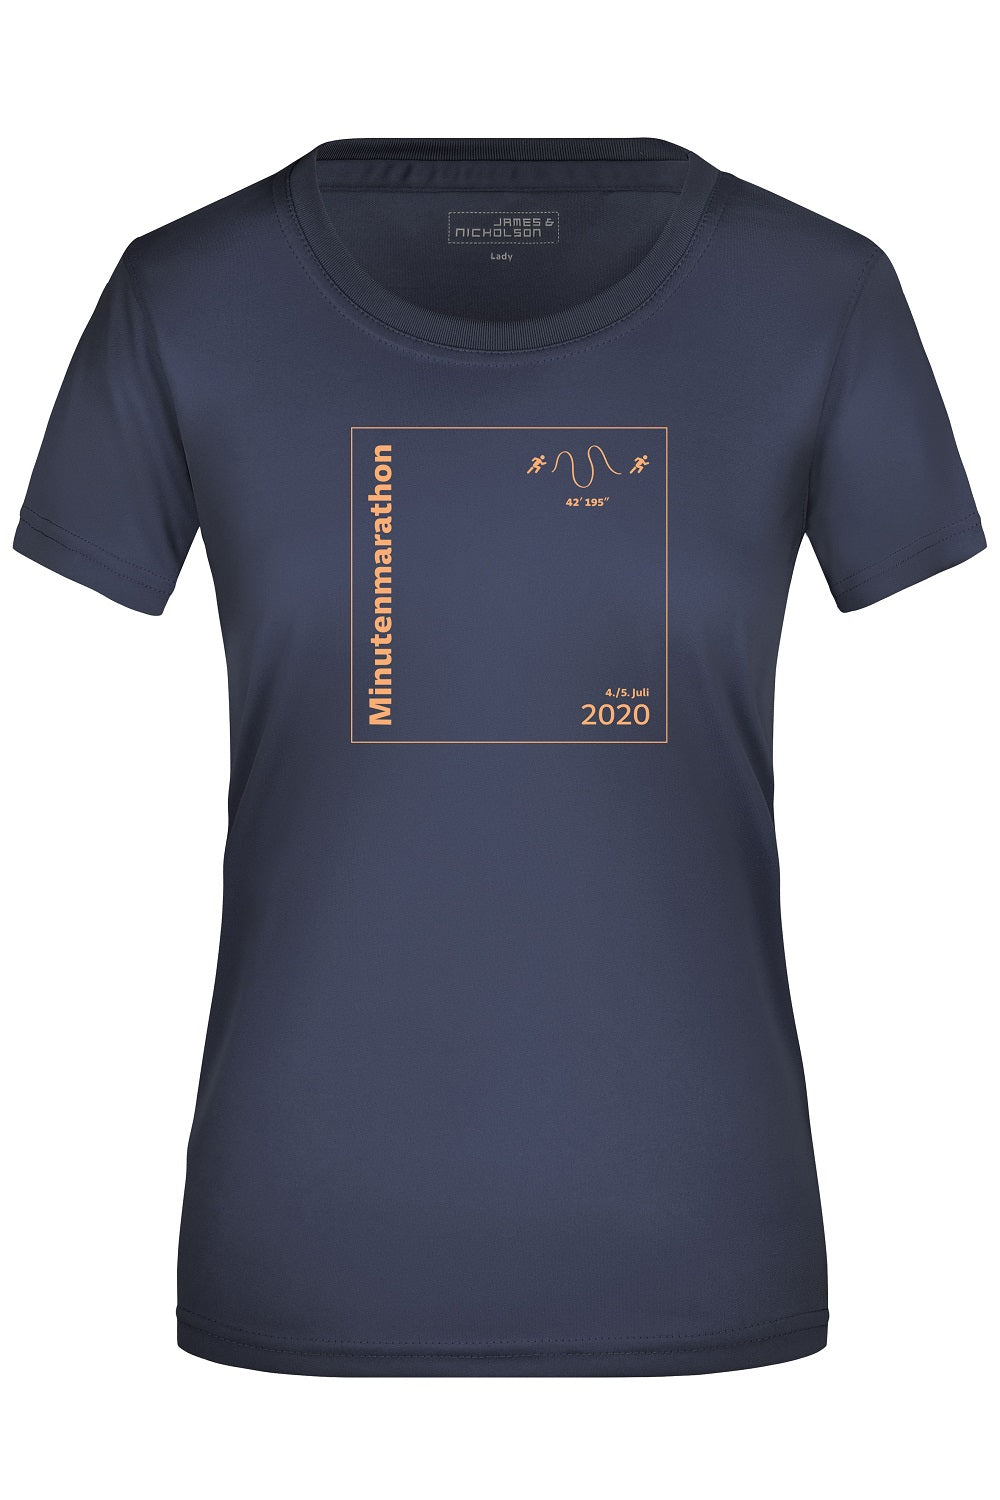 2XL - Damen SZ Laufshirt, blau, Minutenmarathon - Bild 1